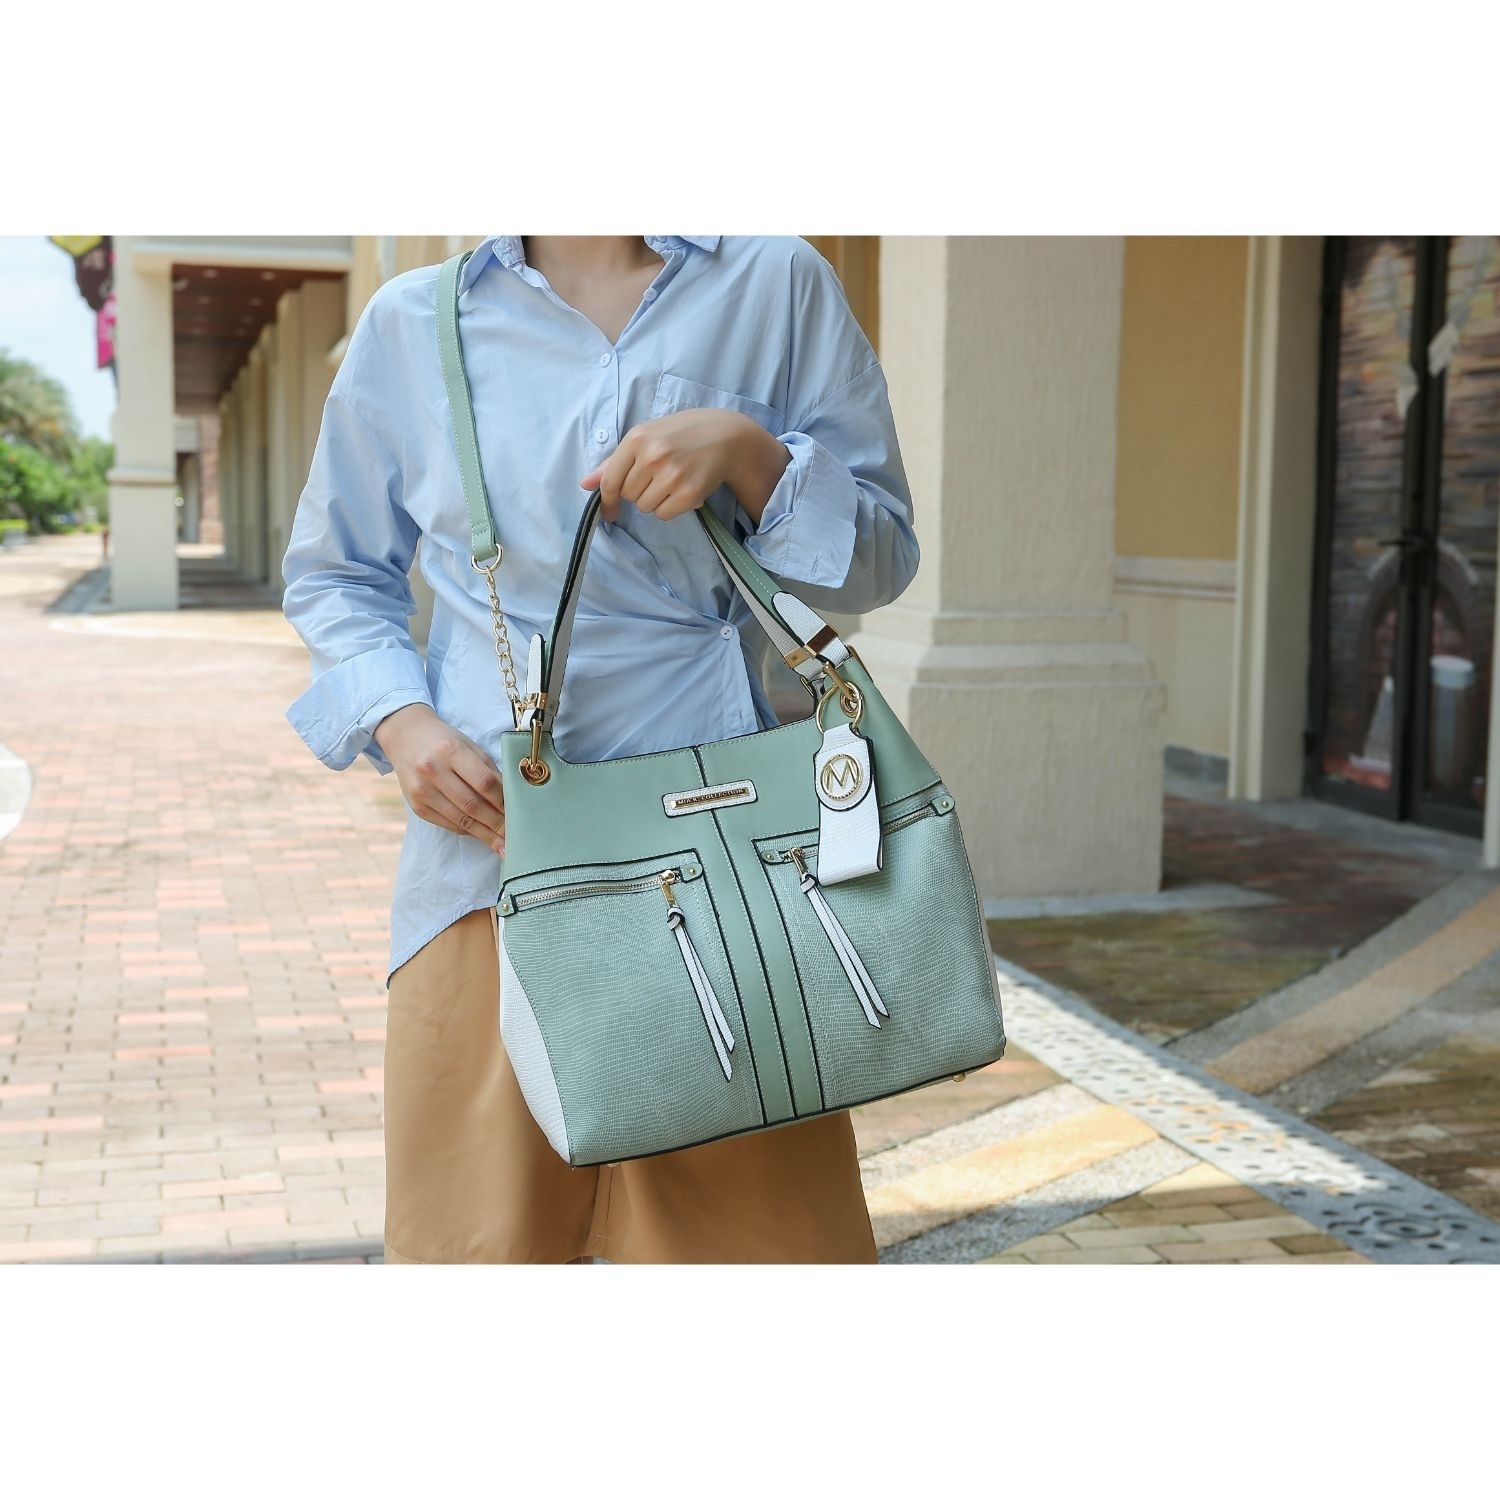 MKF Collection Sofia Tote 2 Pcs Handbag With Keyring By Mia K. - Light Gray